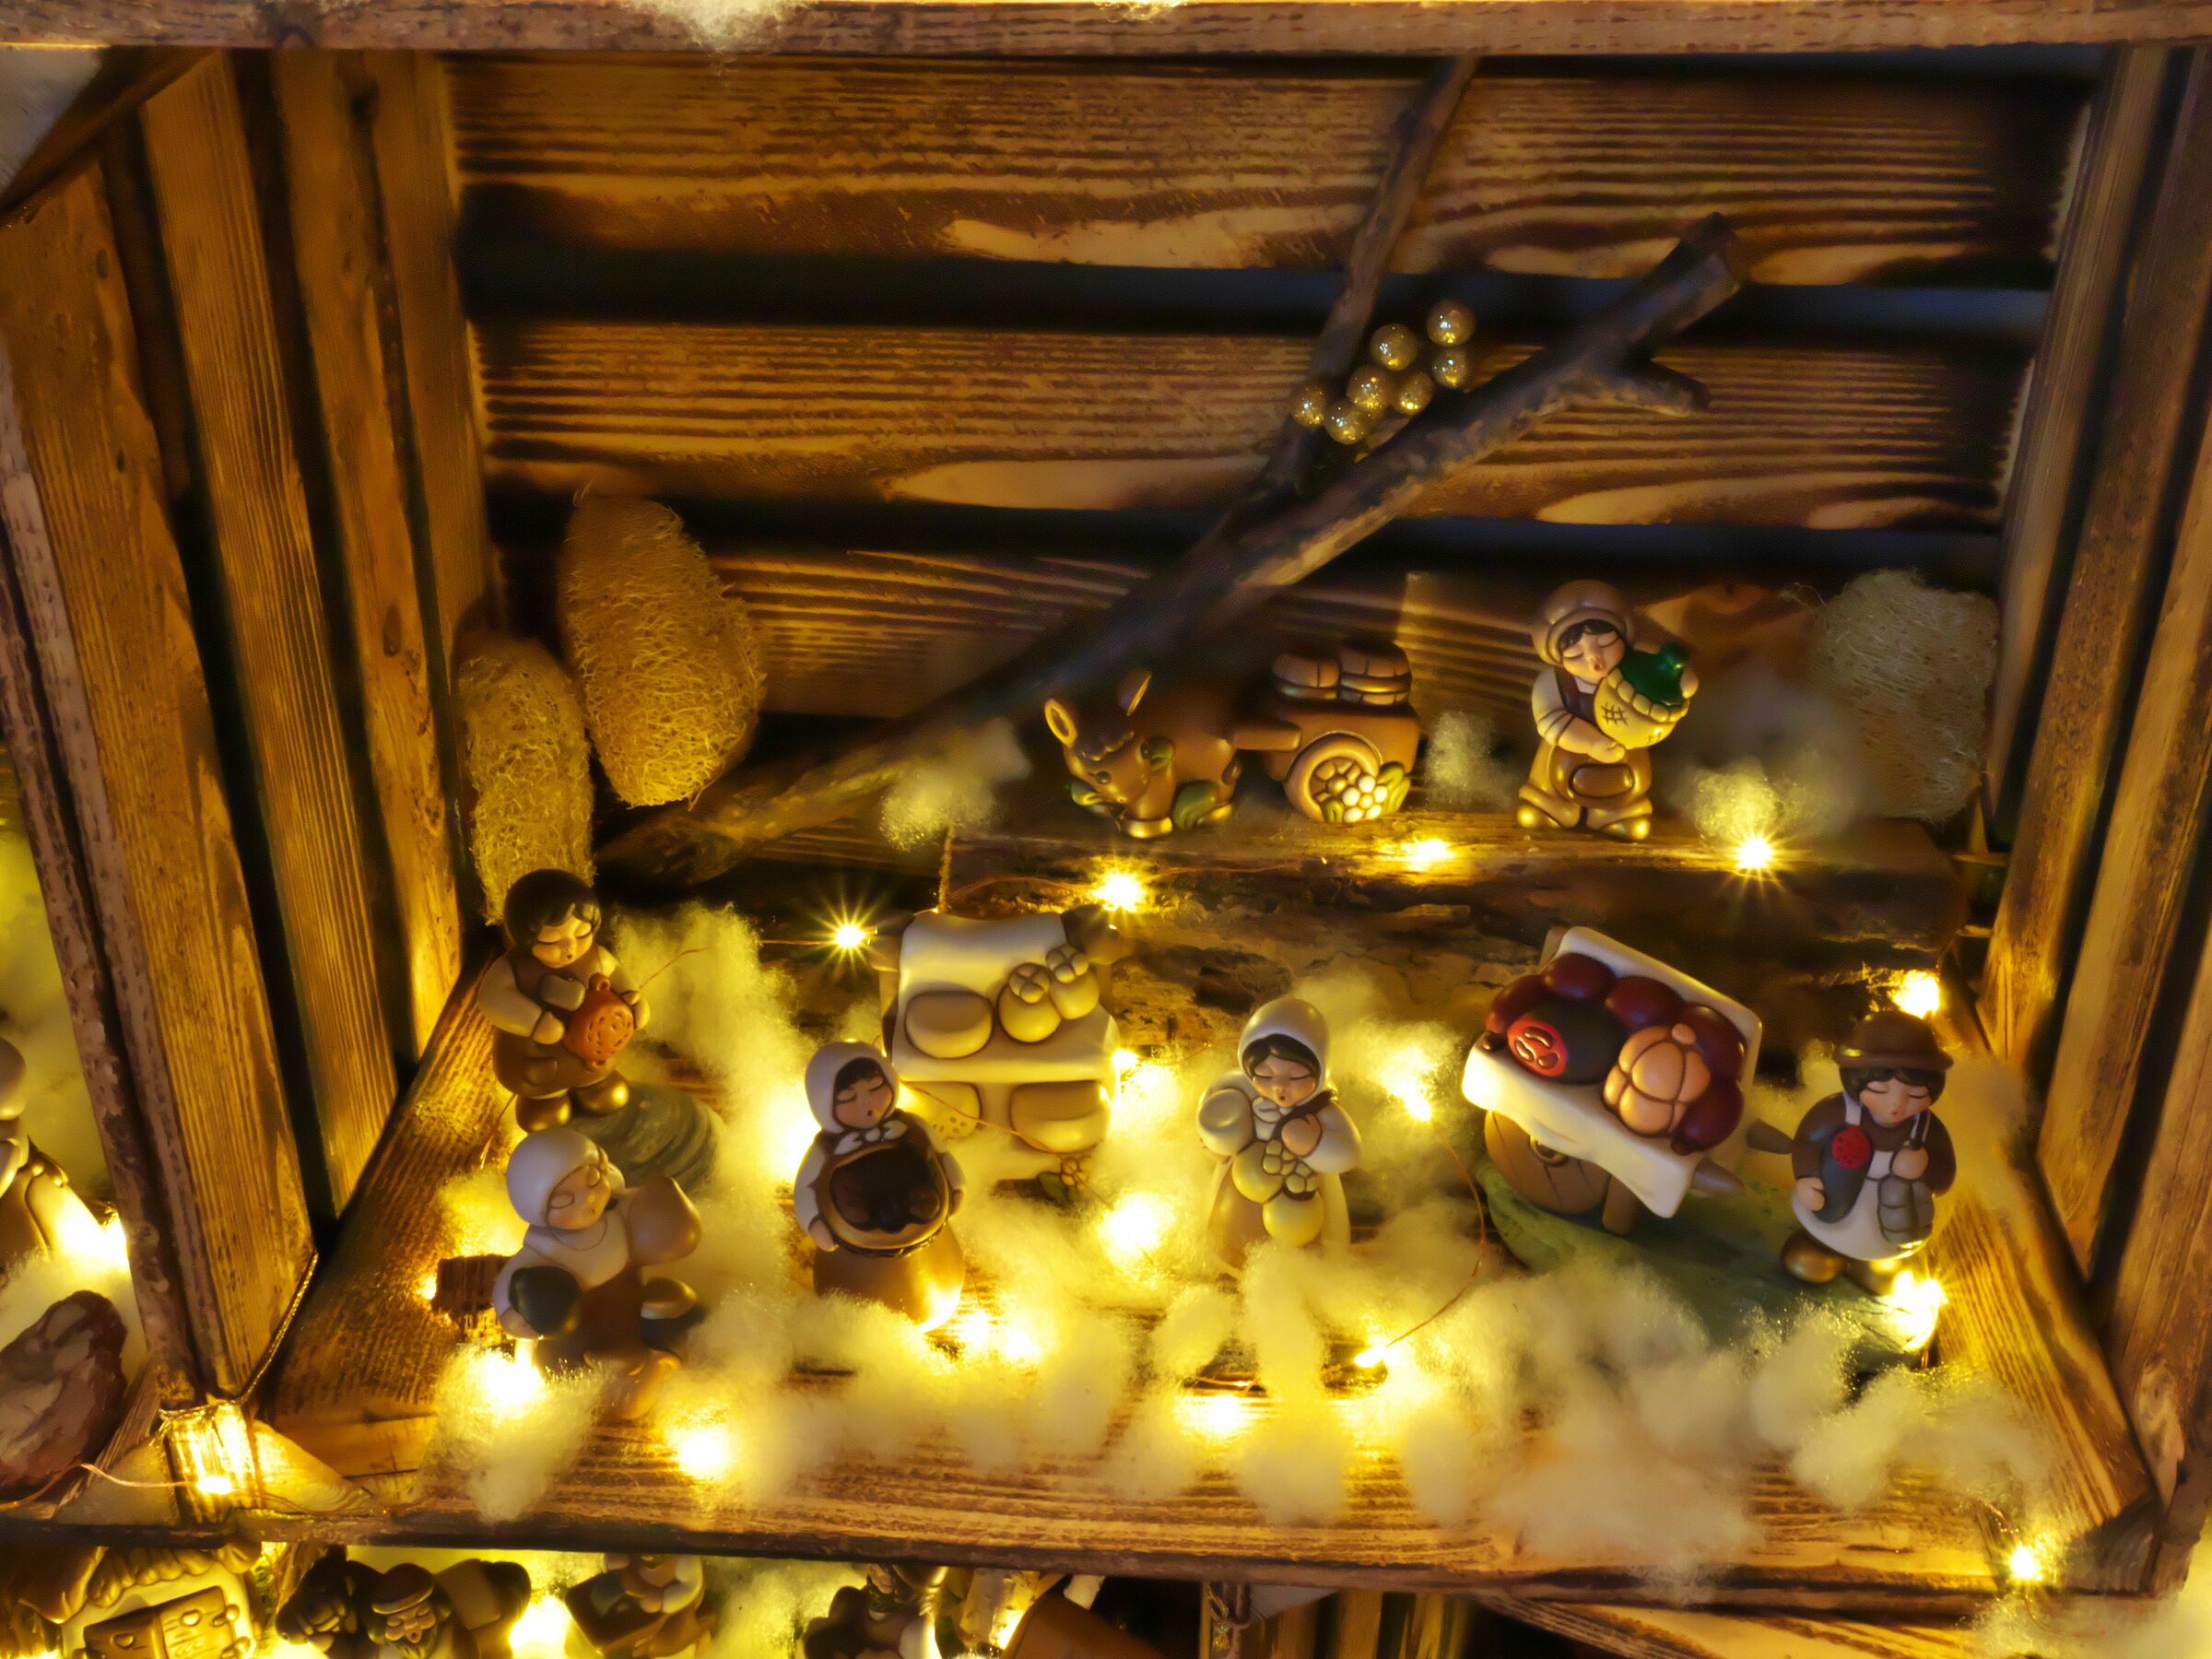 The Nativity Scene 2...